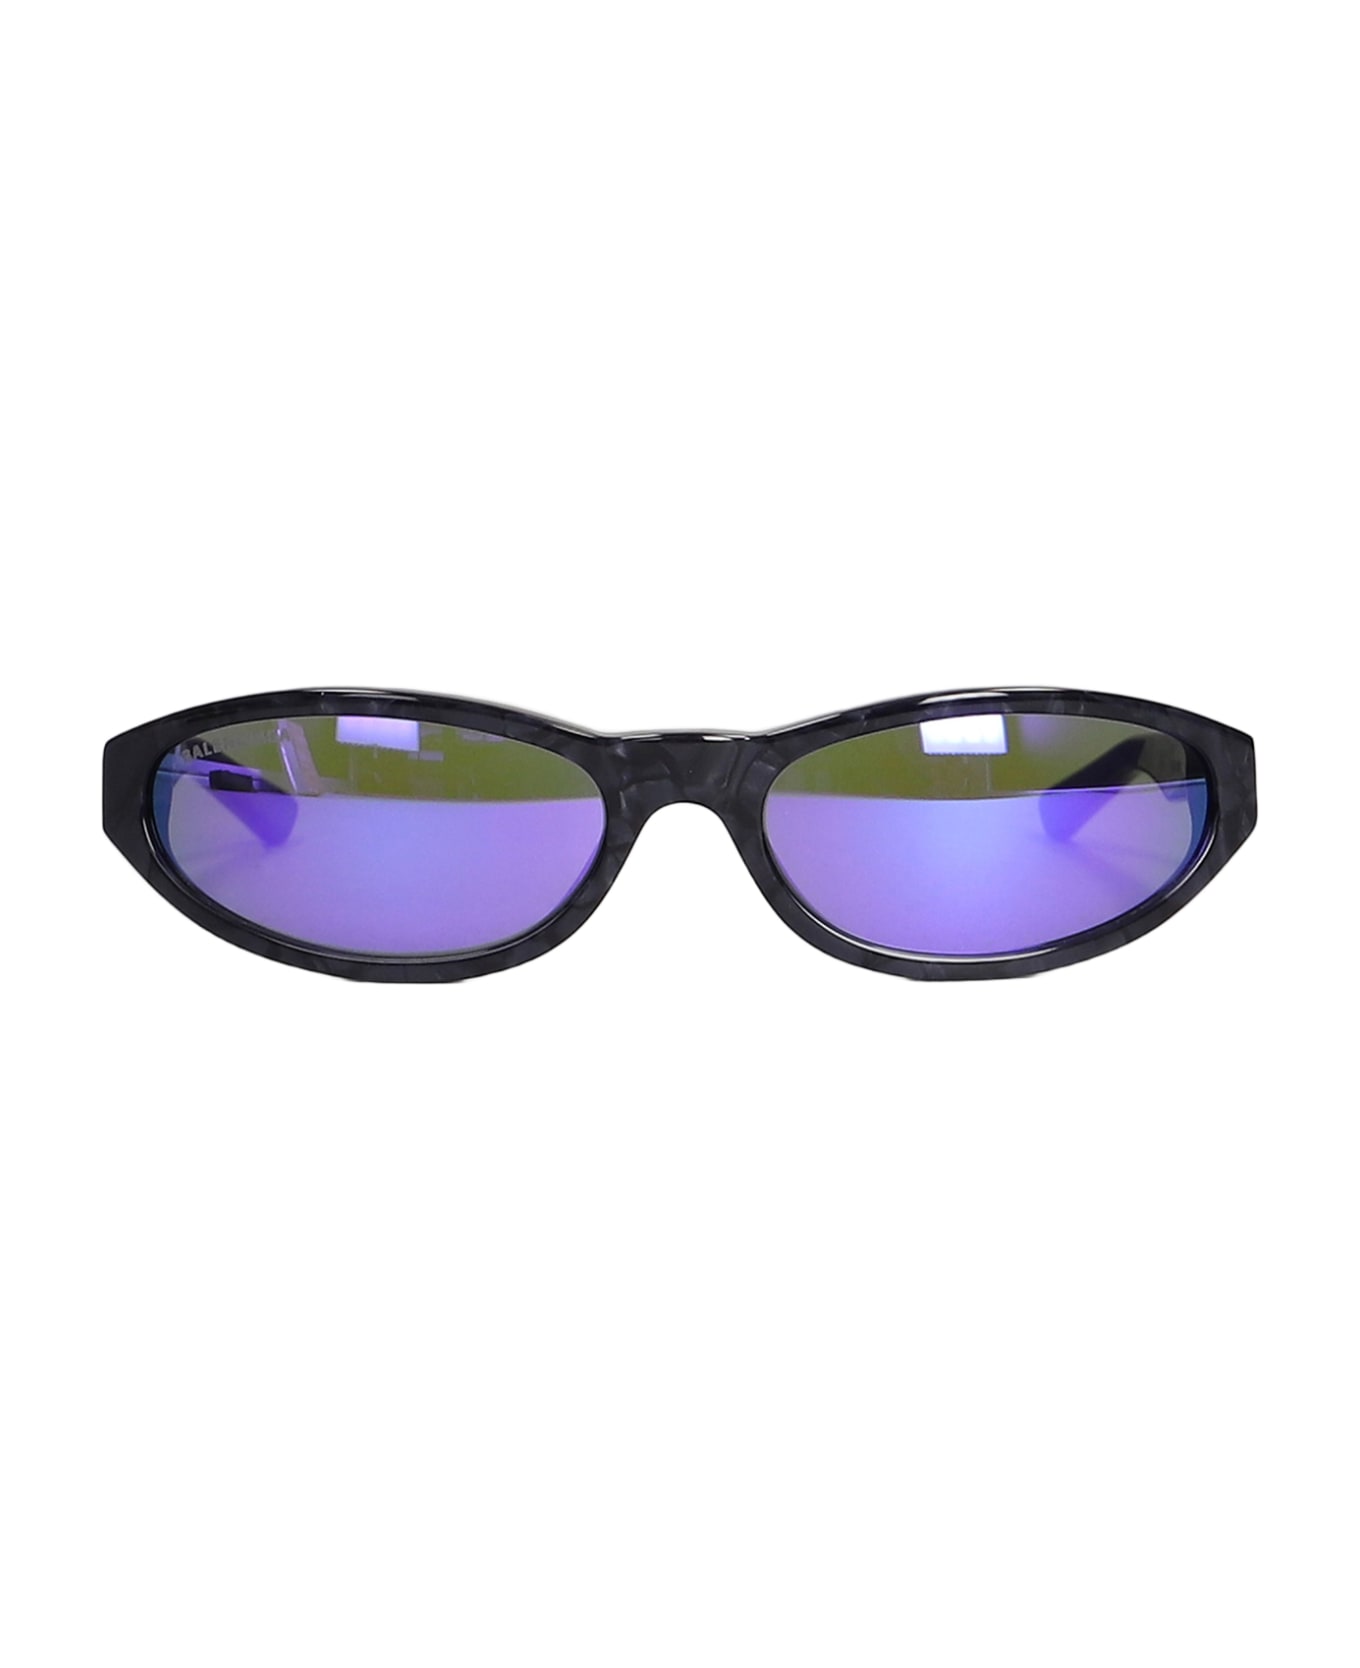 Balenciaga Neo Round Sunglasses In Viola Acetate - Viola